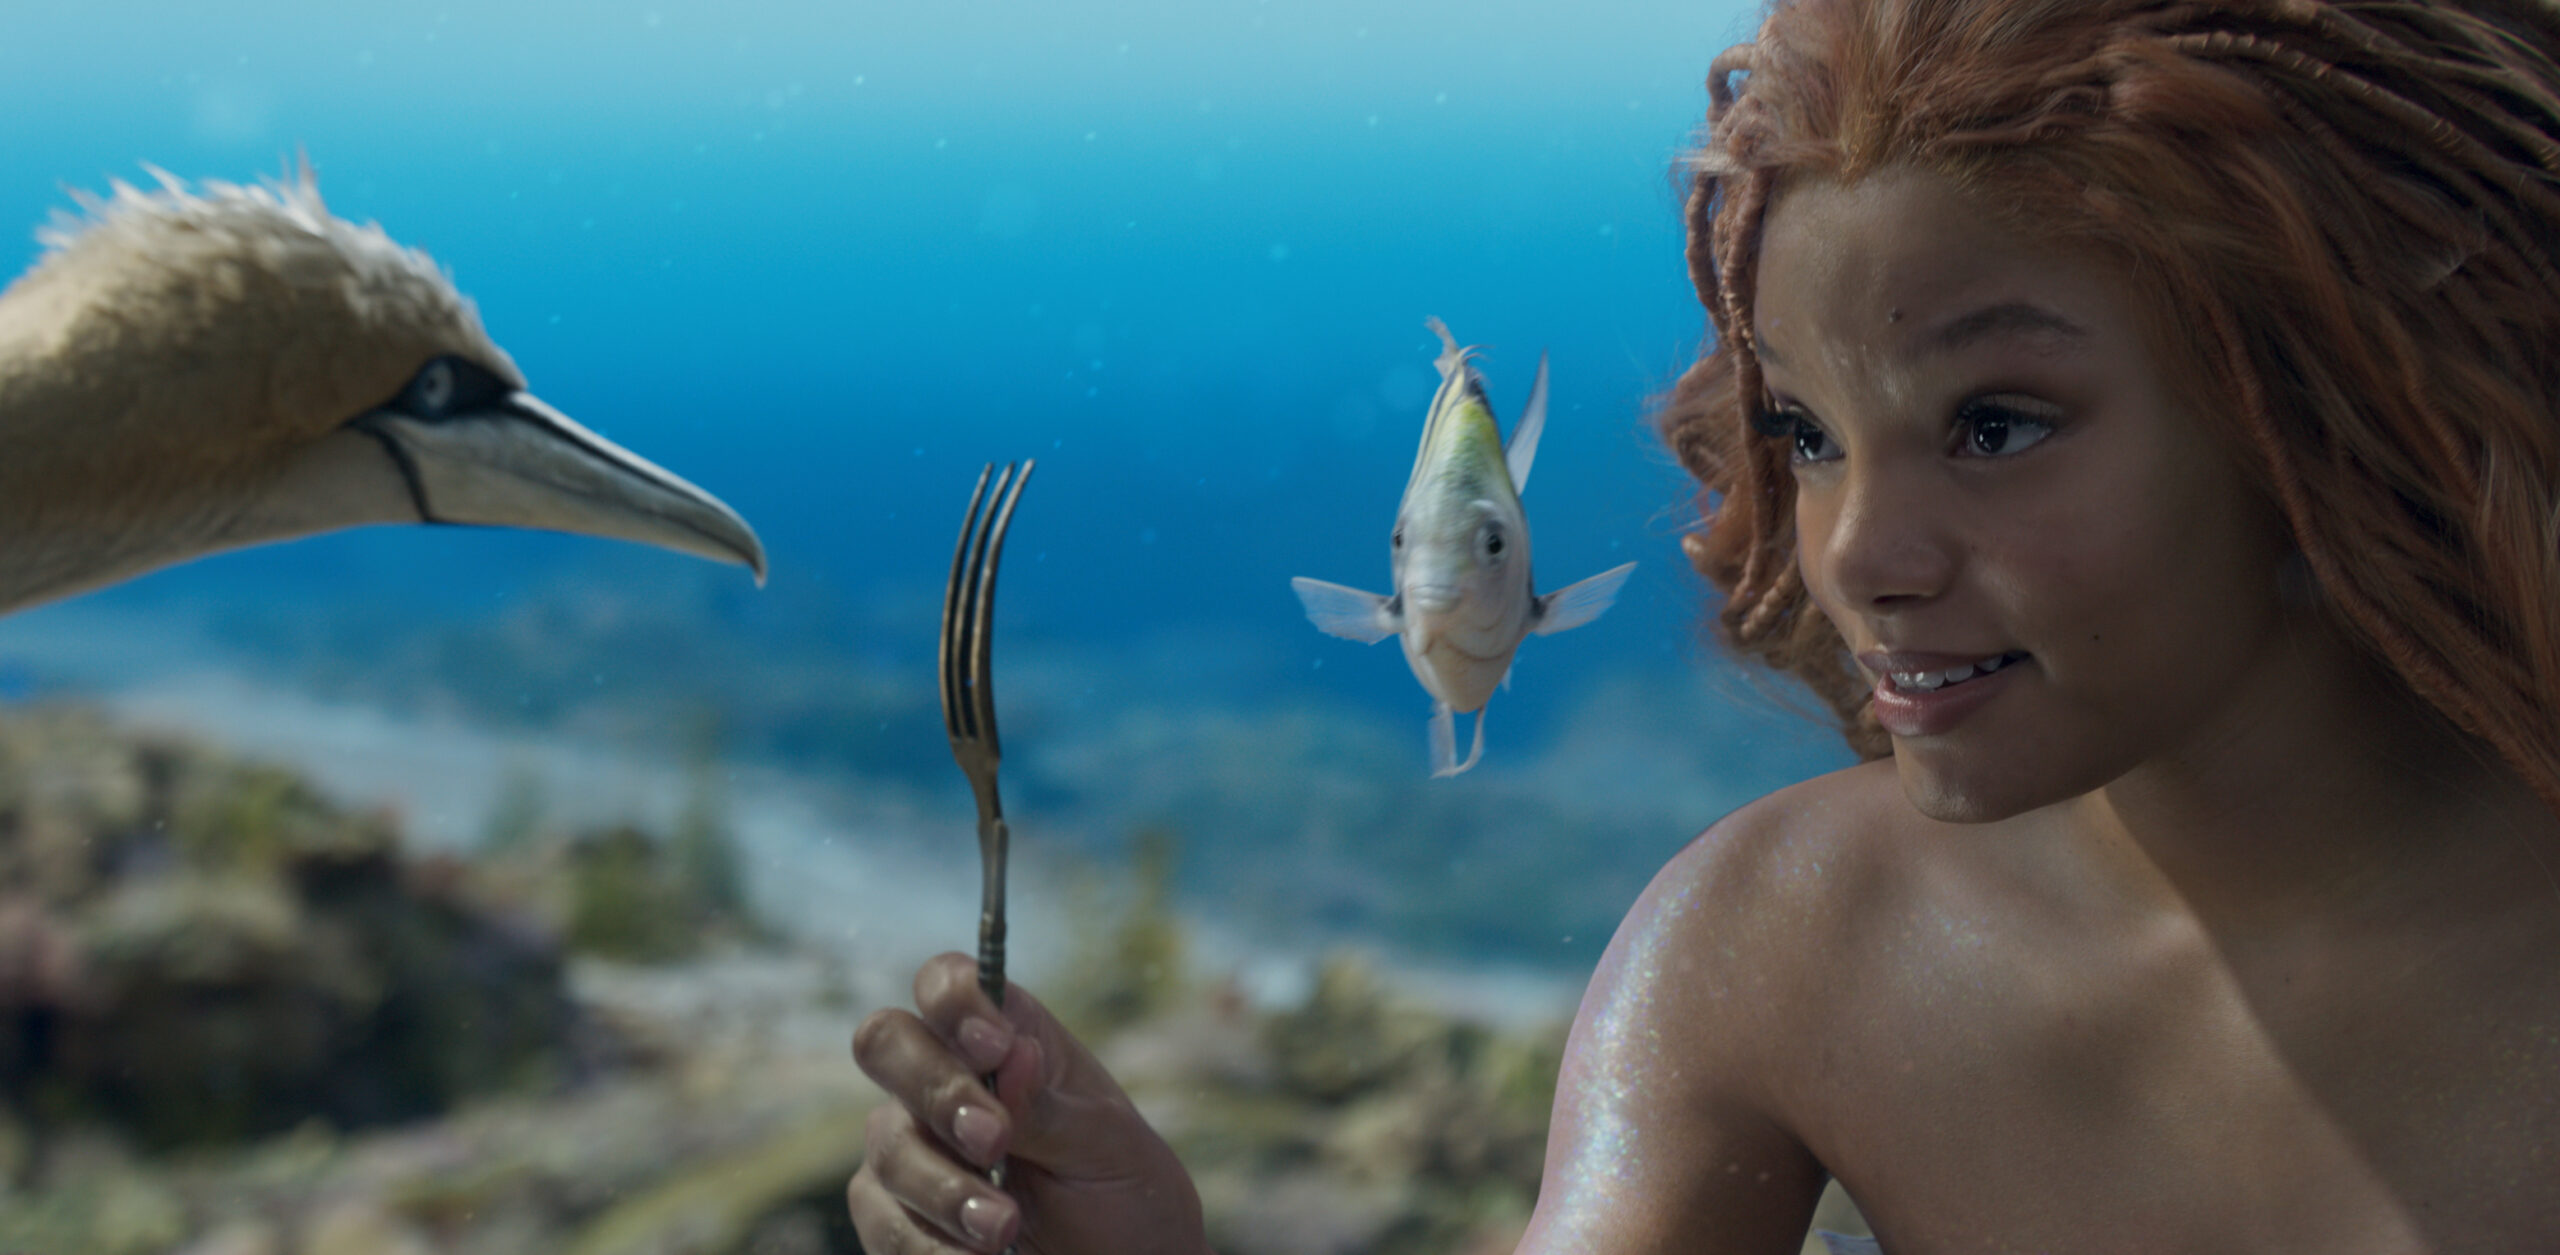 La sirenetta - The little mermaid - immagini dal film